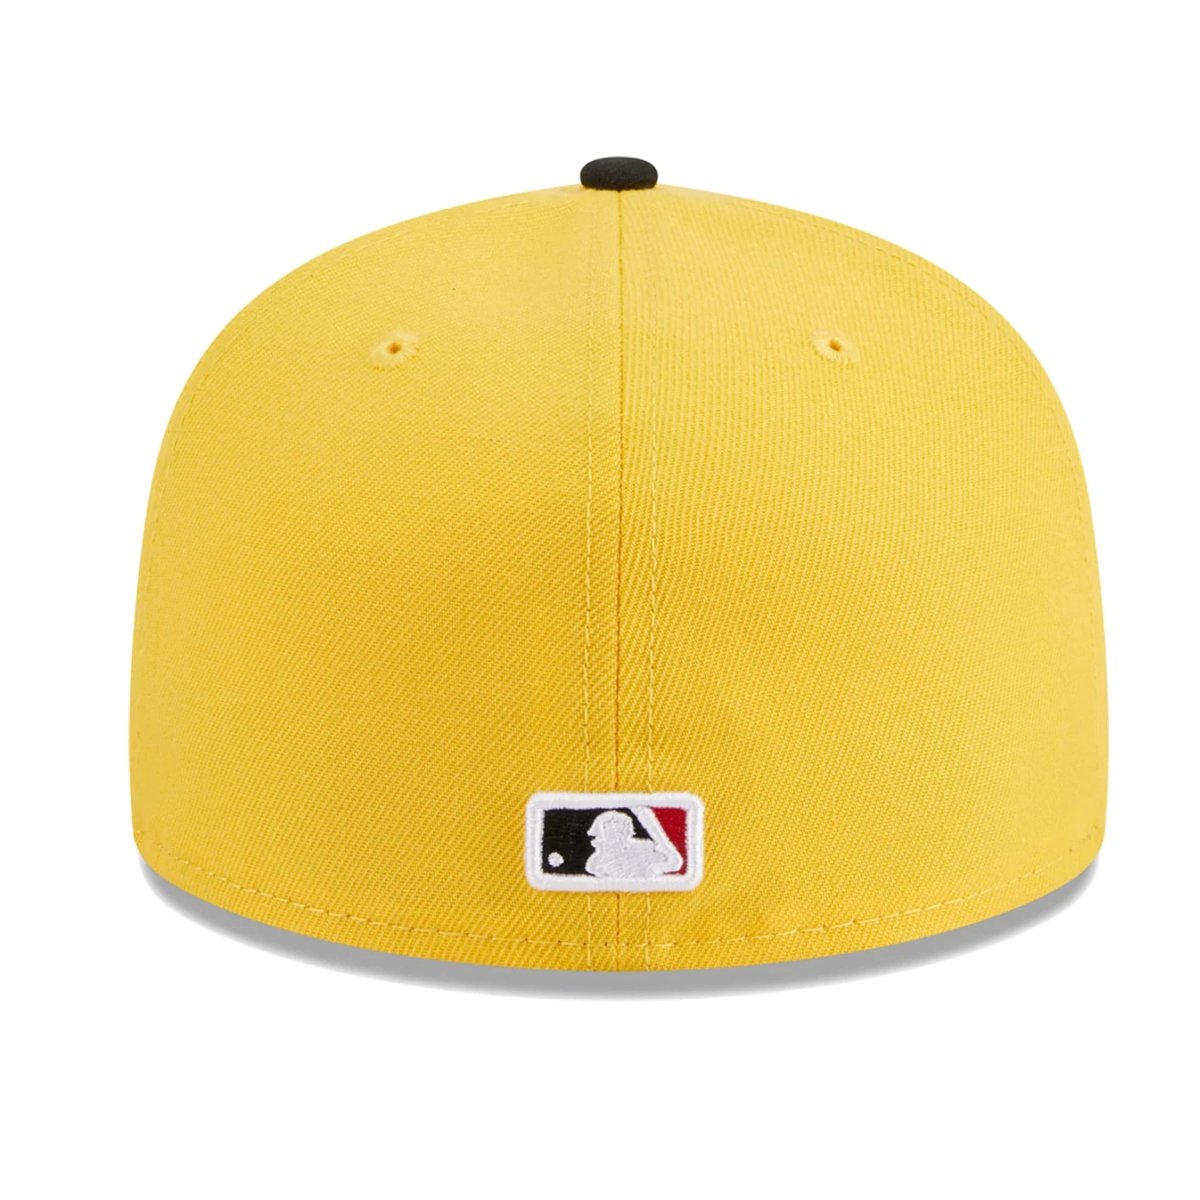 Gorra plana verde y amarilla ajustada 59FIFTY AC Perf de Oakland Athletics  MLB de New Era